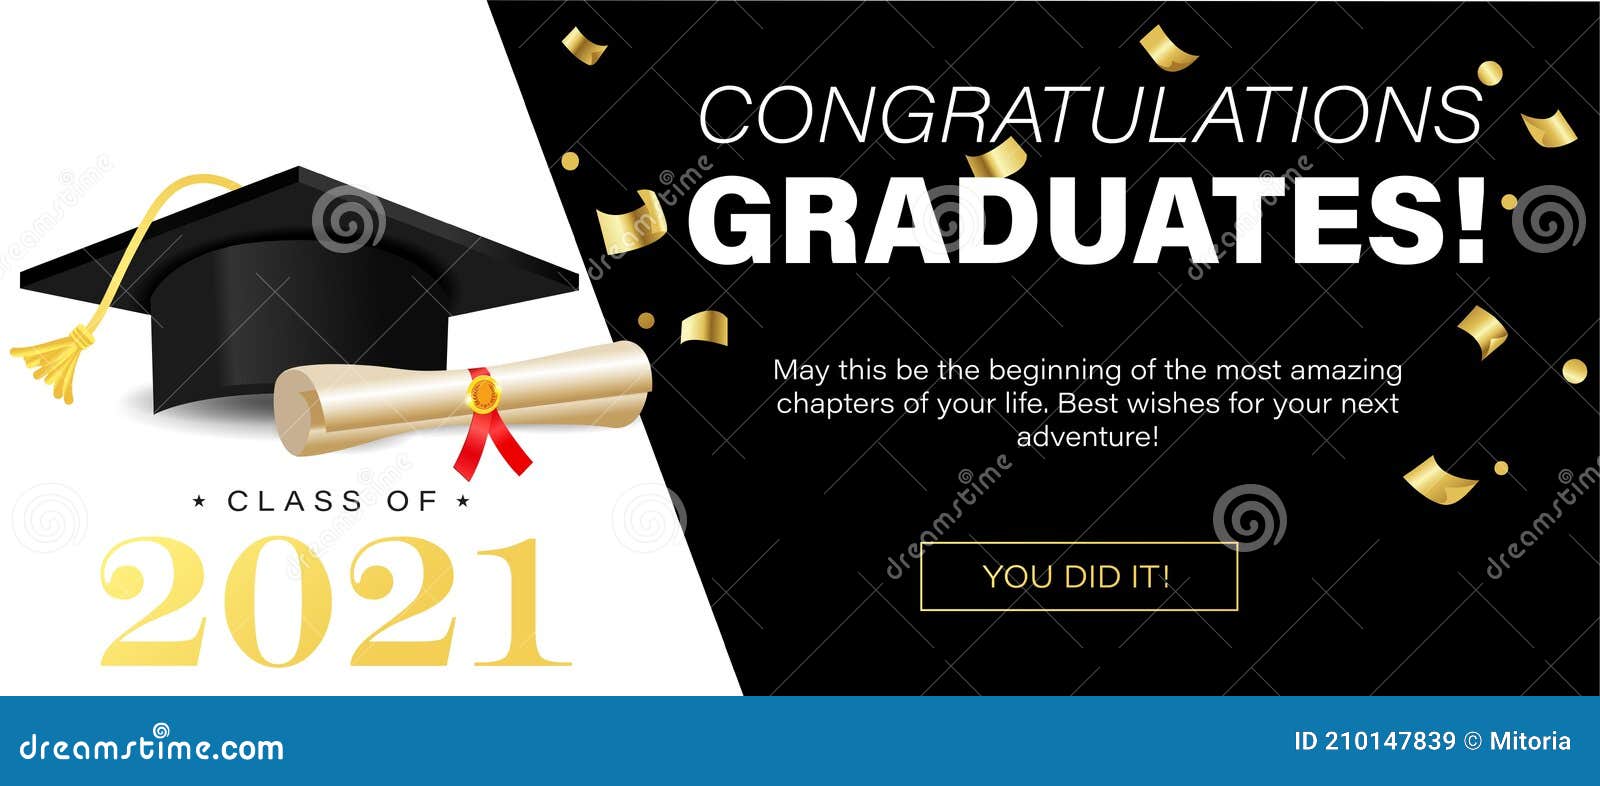 congratulations graduates banner concept. class of 2021. graduation  template for websites, social media, blogs, greeting